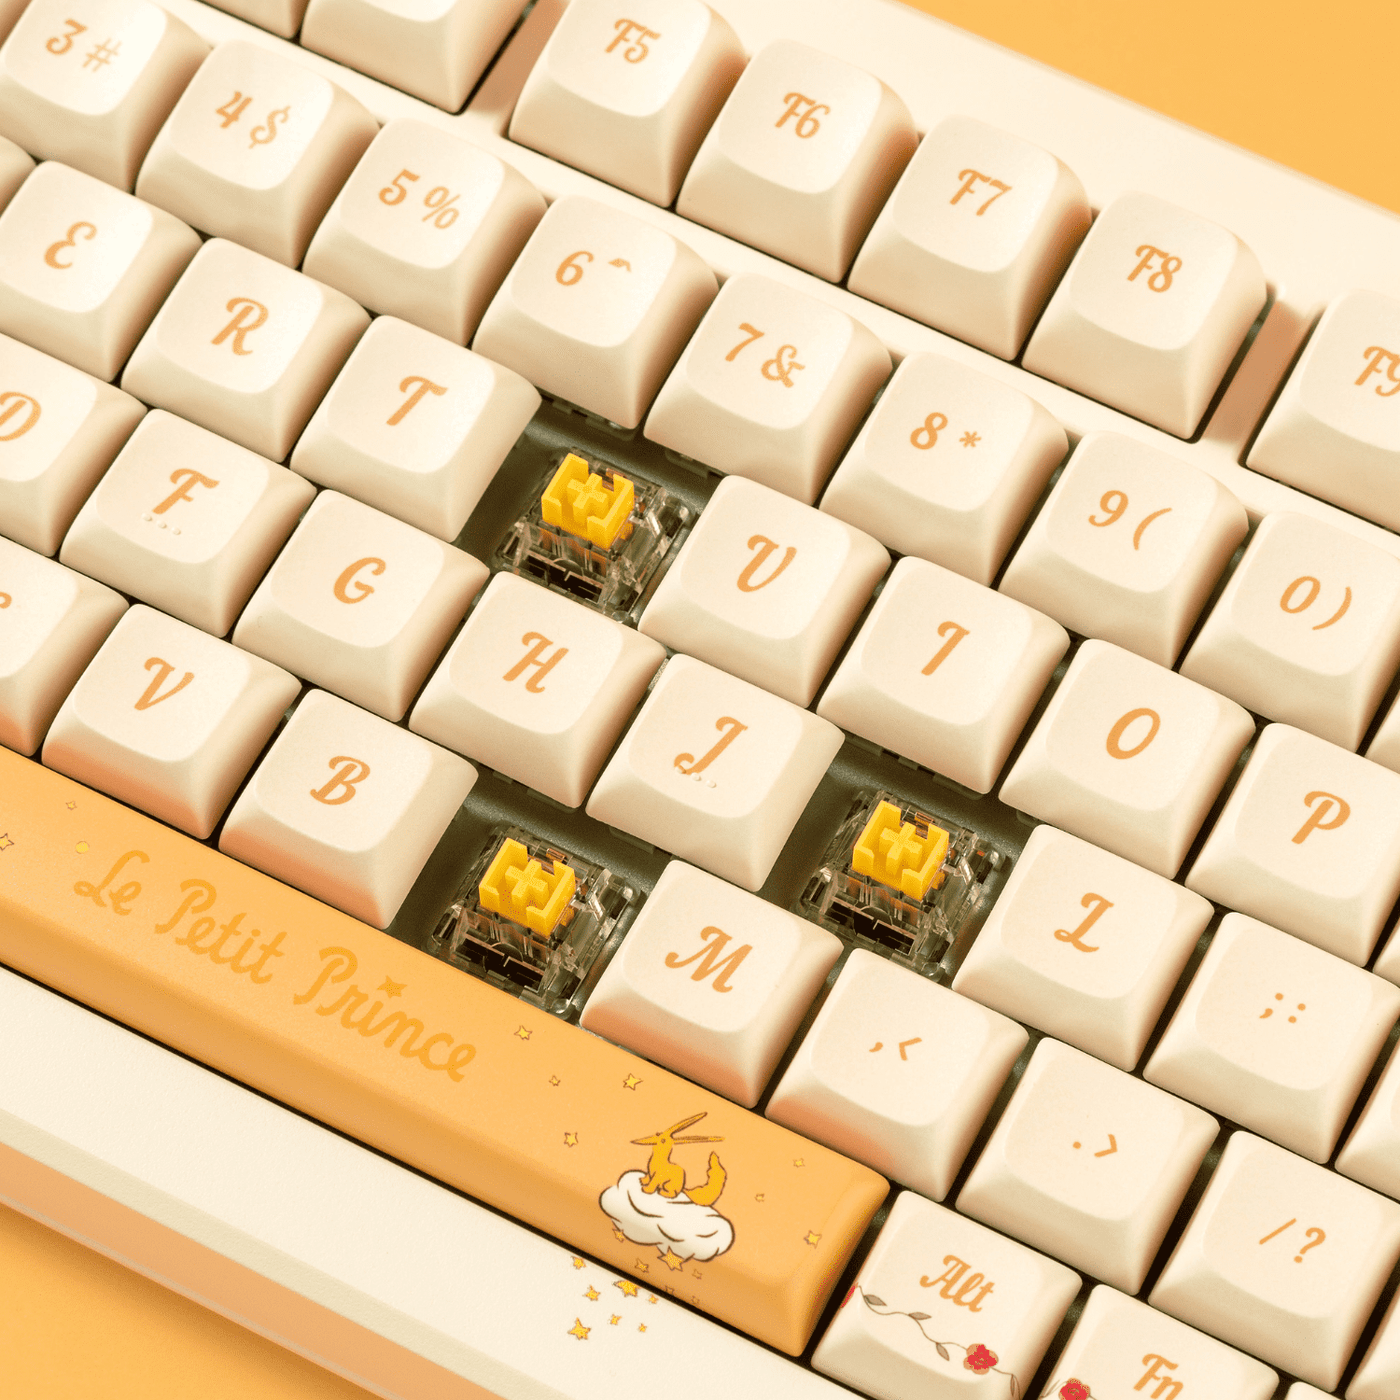 IQUNIX x Little Prince ZX75 Sunset Ponder Mechanical Keyboard